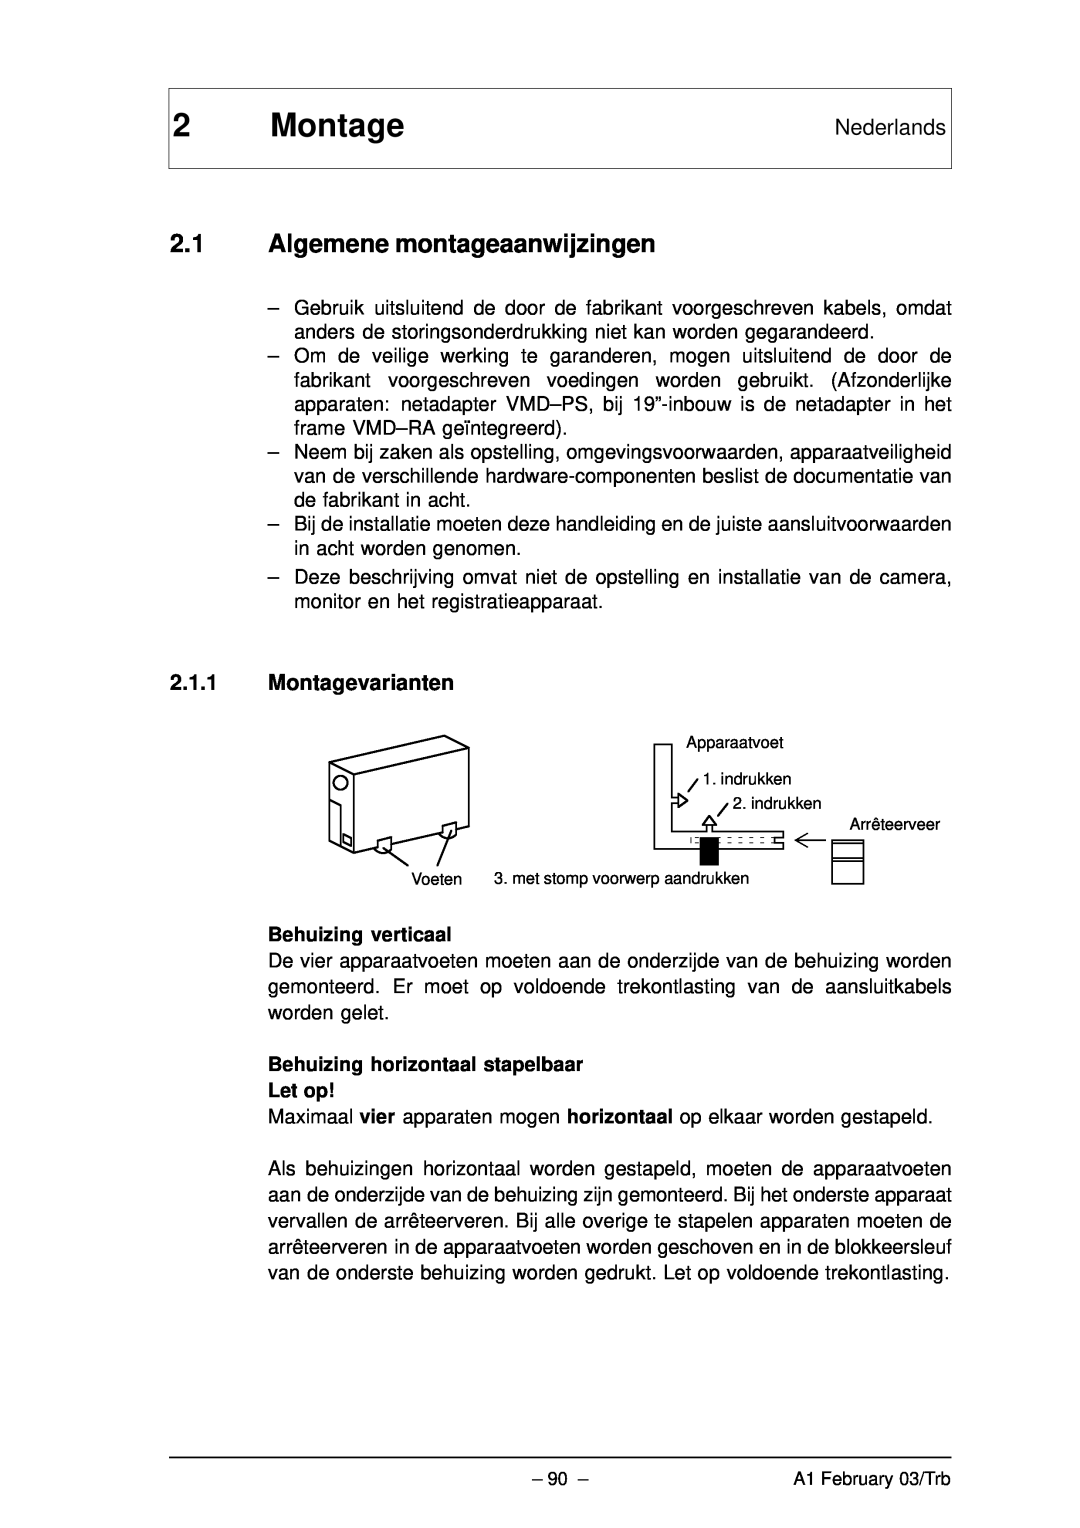 Bosch Appliances VMD01 M60 NTSC, VMD01 M50 PAL 2.1Algemene montageaanwijzingen, Montage, Nederlands, Behuizing verticaal 